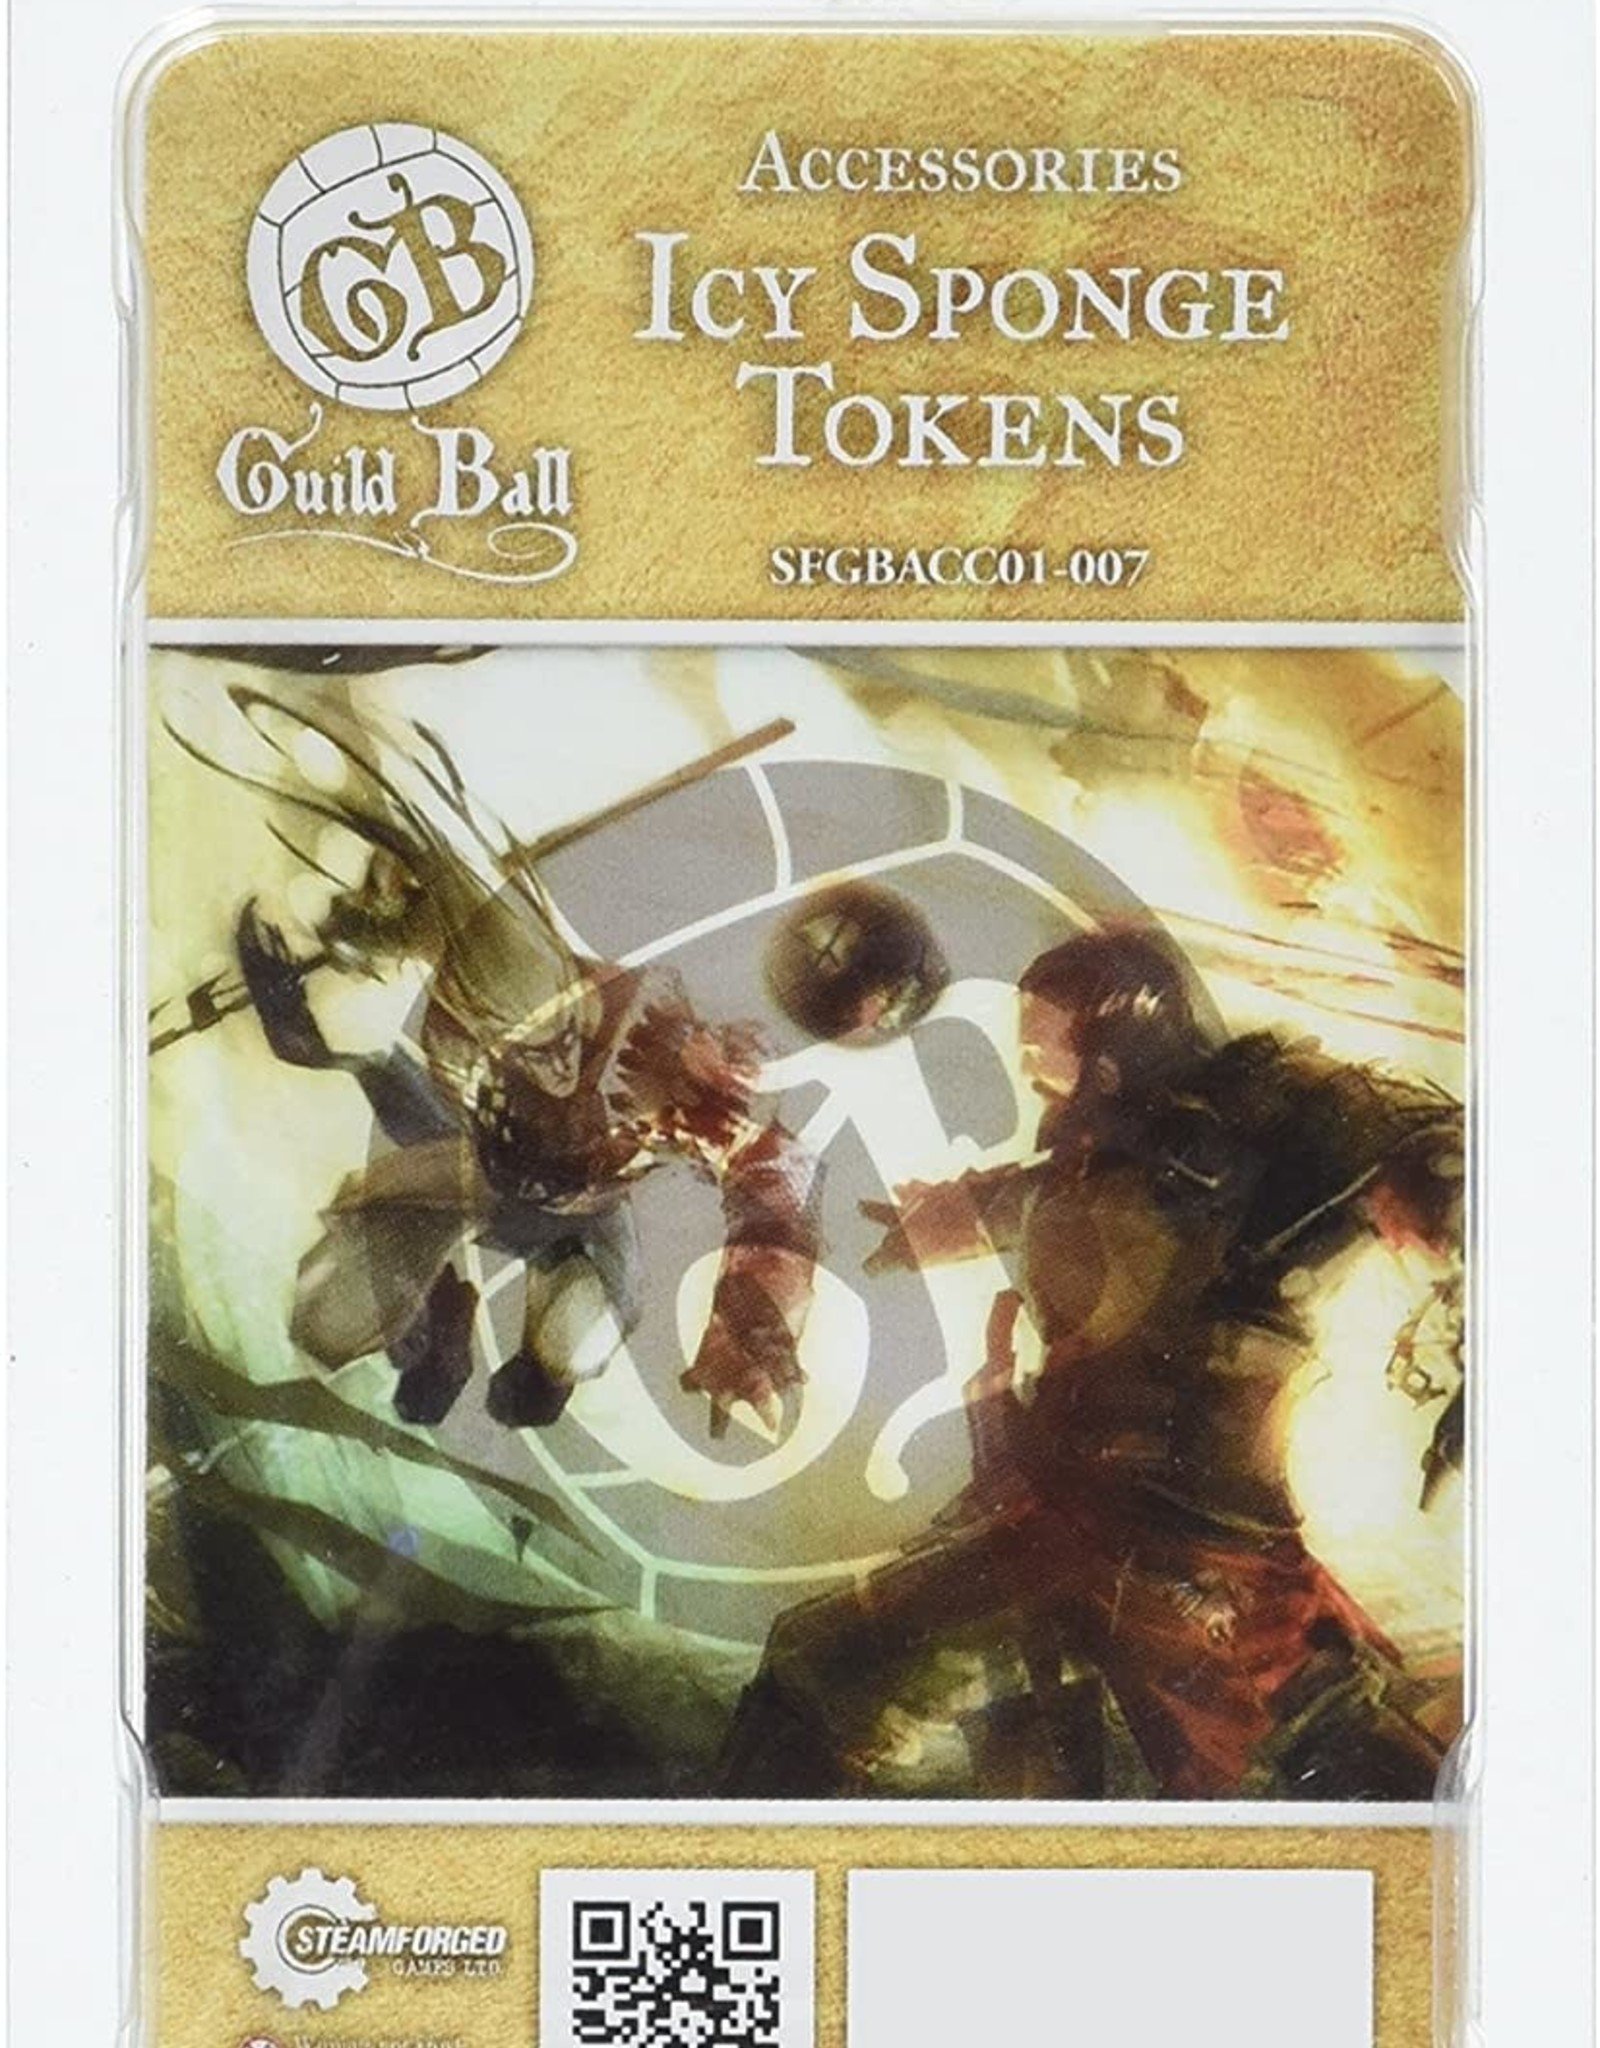 Guild Ball GB - Icy Sponge Tokens